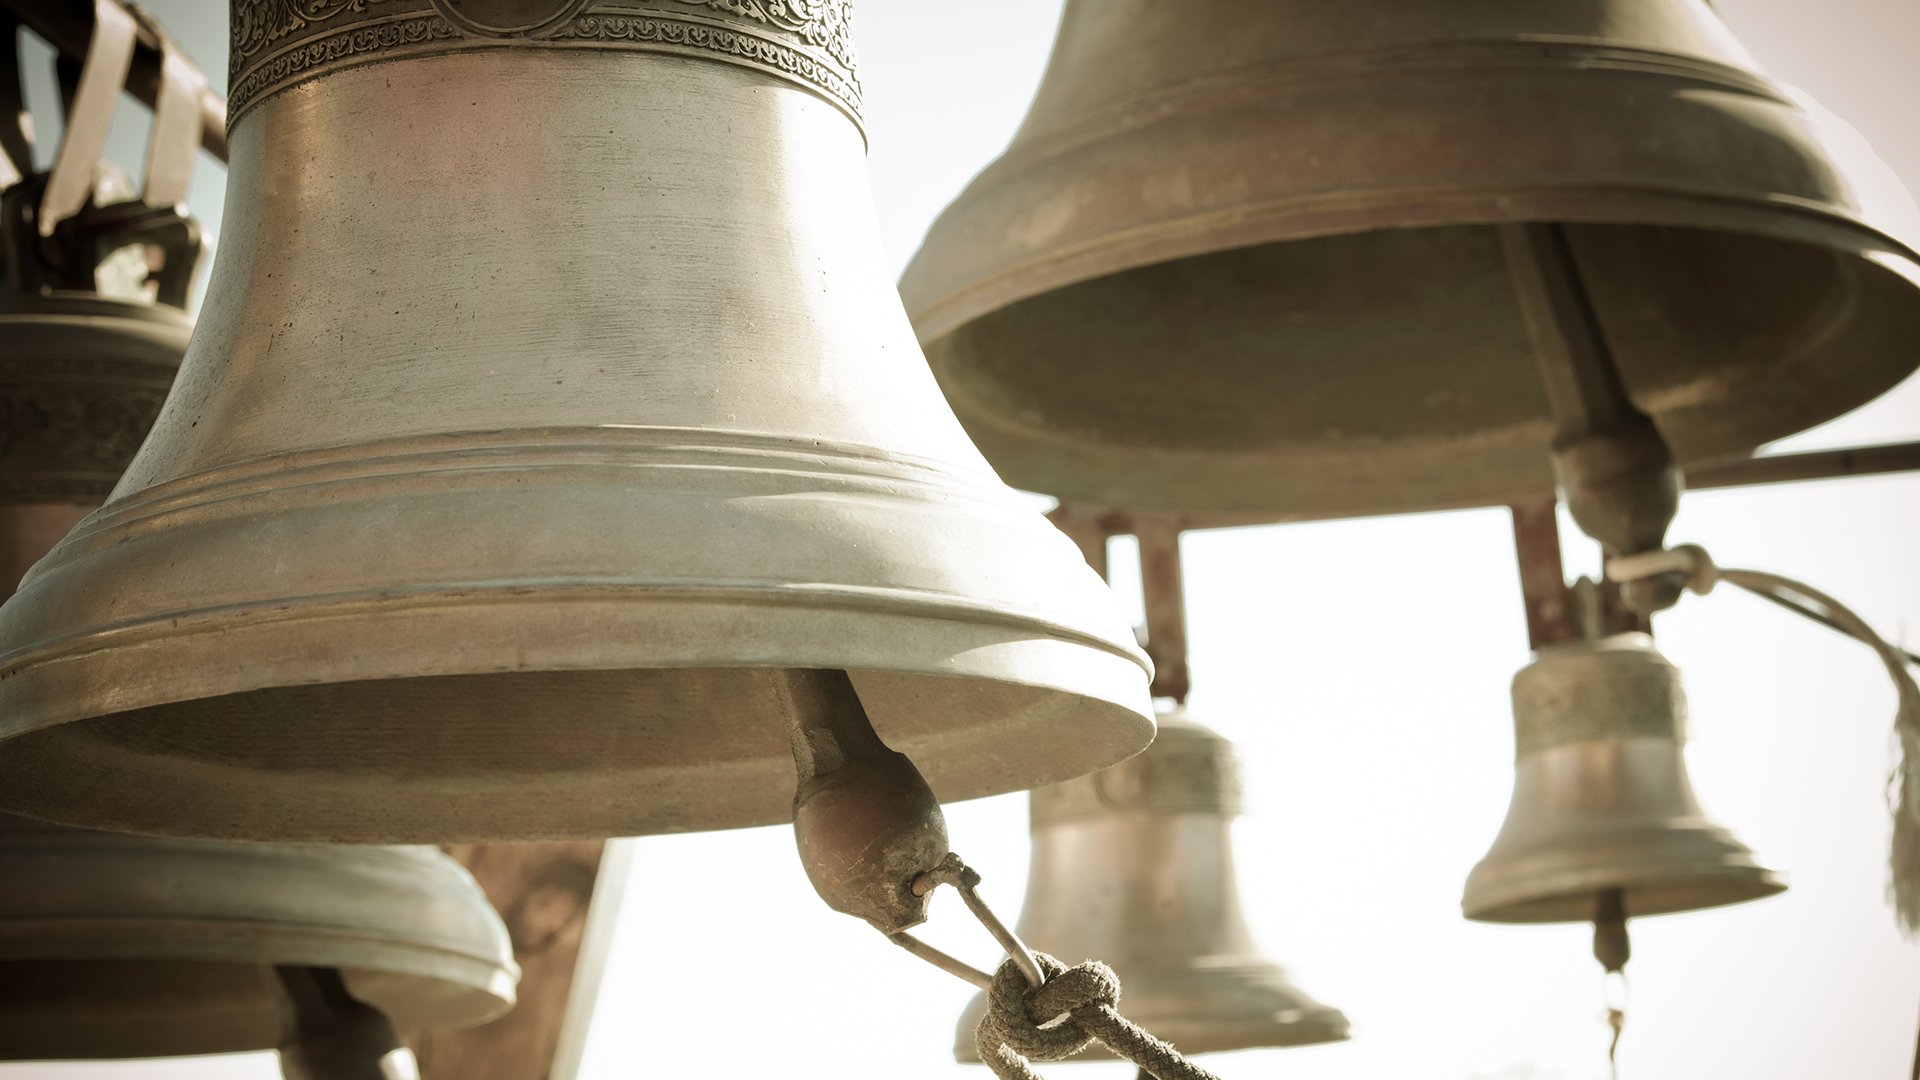 Big Church Religious Bell Ringing in Saint Martin De Re Stock Image - Image  of religion, martin: 170570905